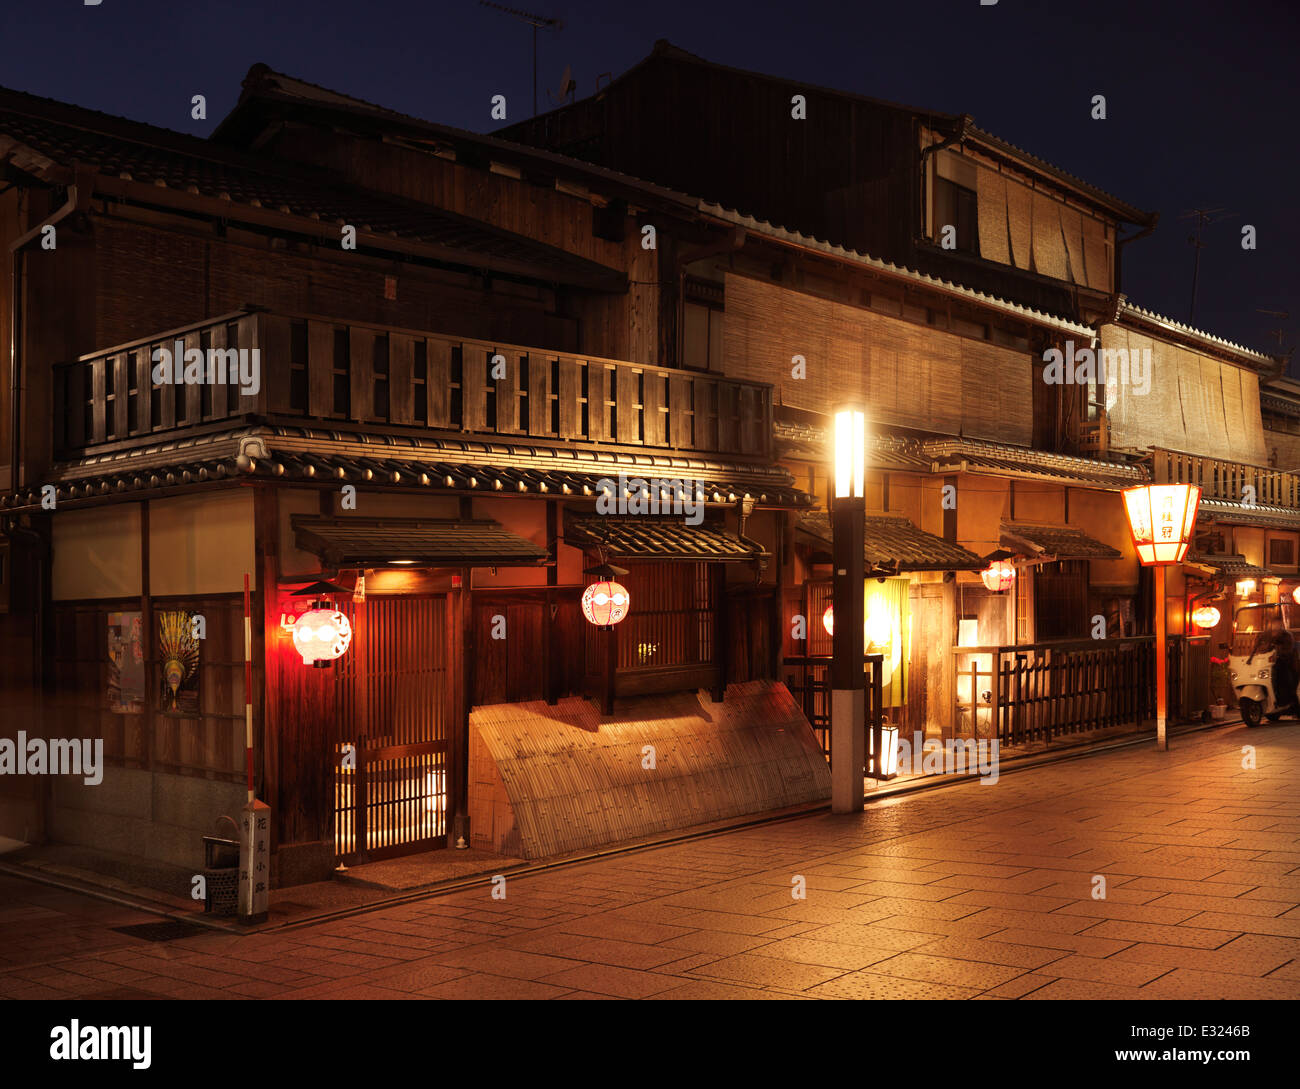 Japanese restaurants at Hanami-koji dori street at night, Hanamikoji geisha district, Gion, Kyoto, Japan Stock Photo